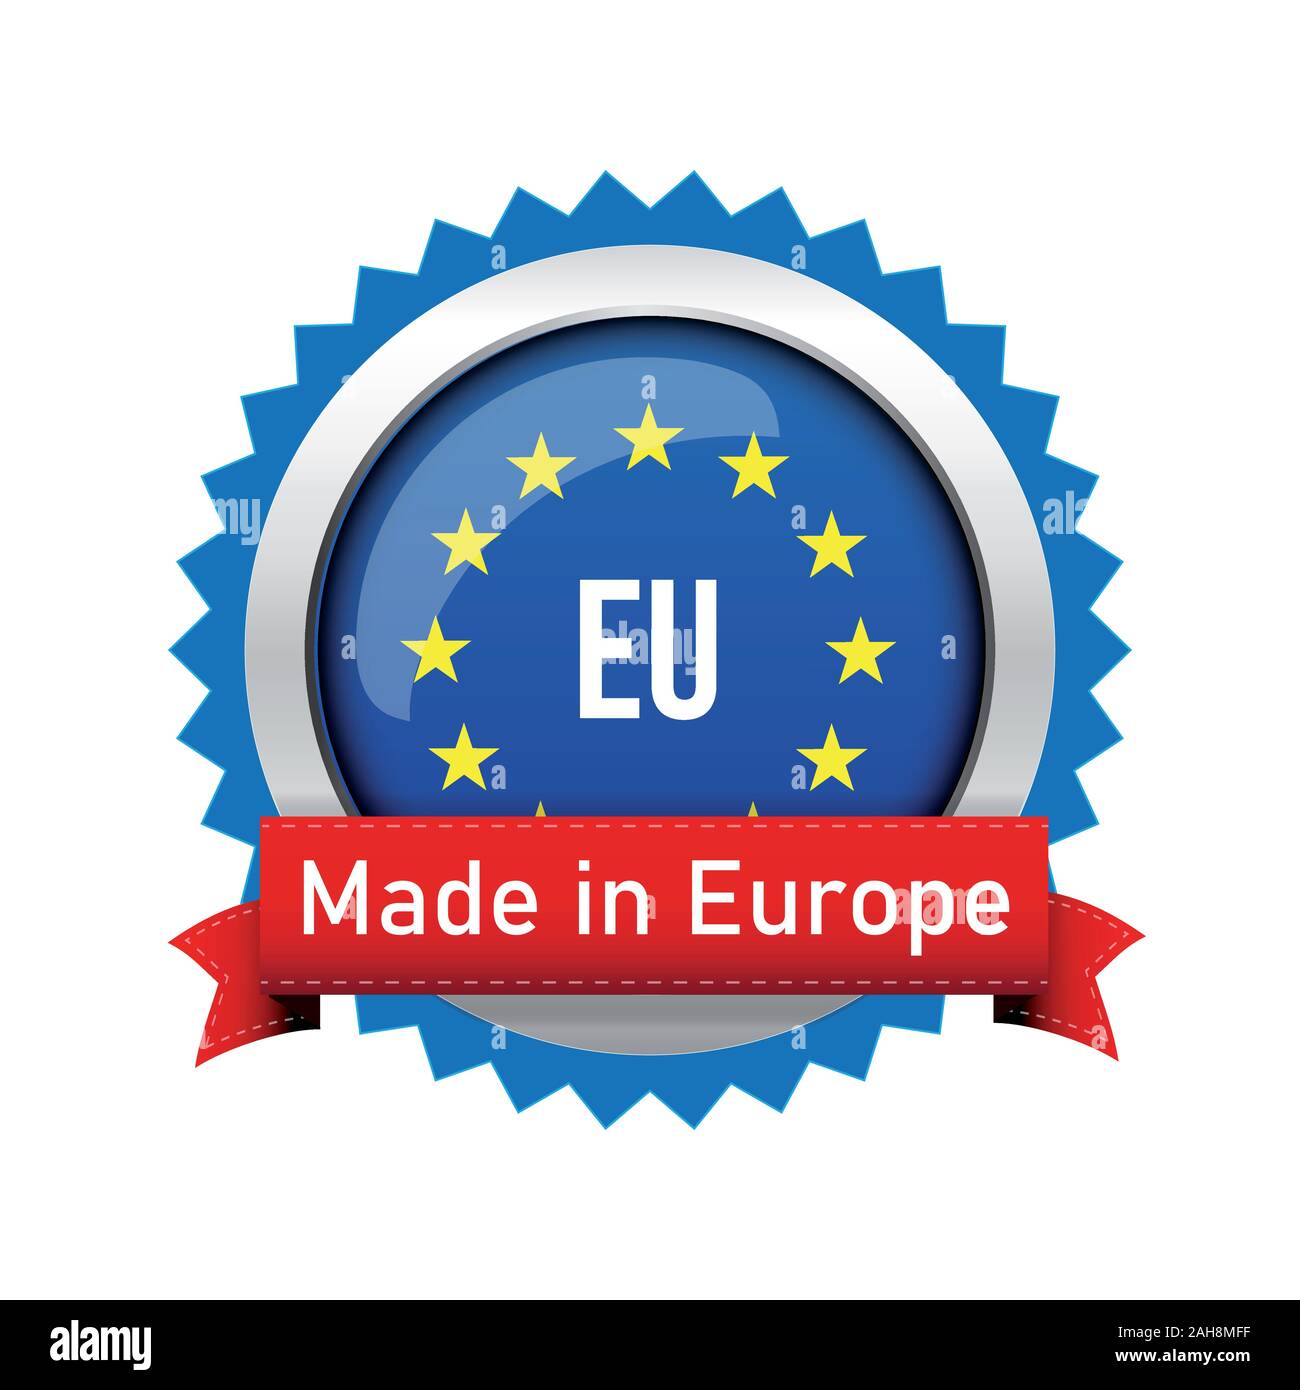 Made in Europe - EU badge sign Stock Vector